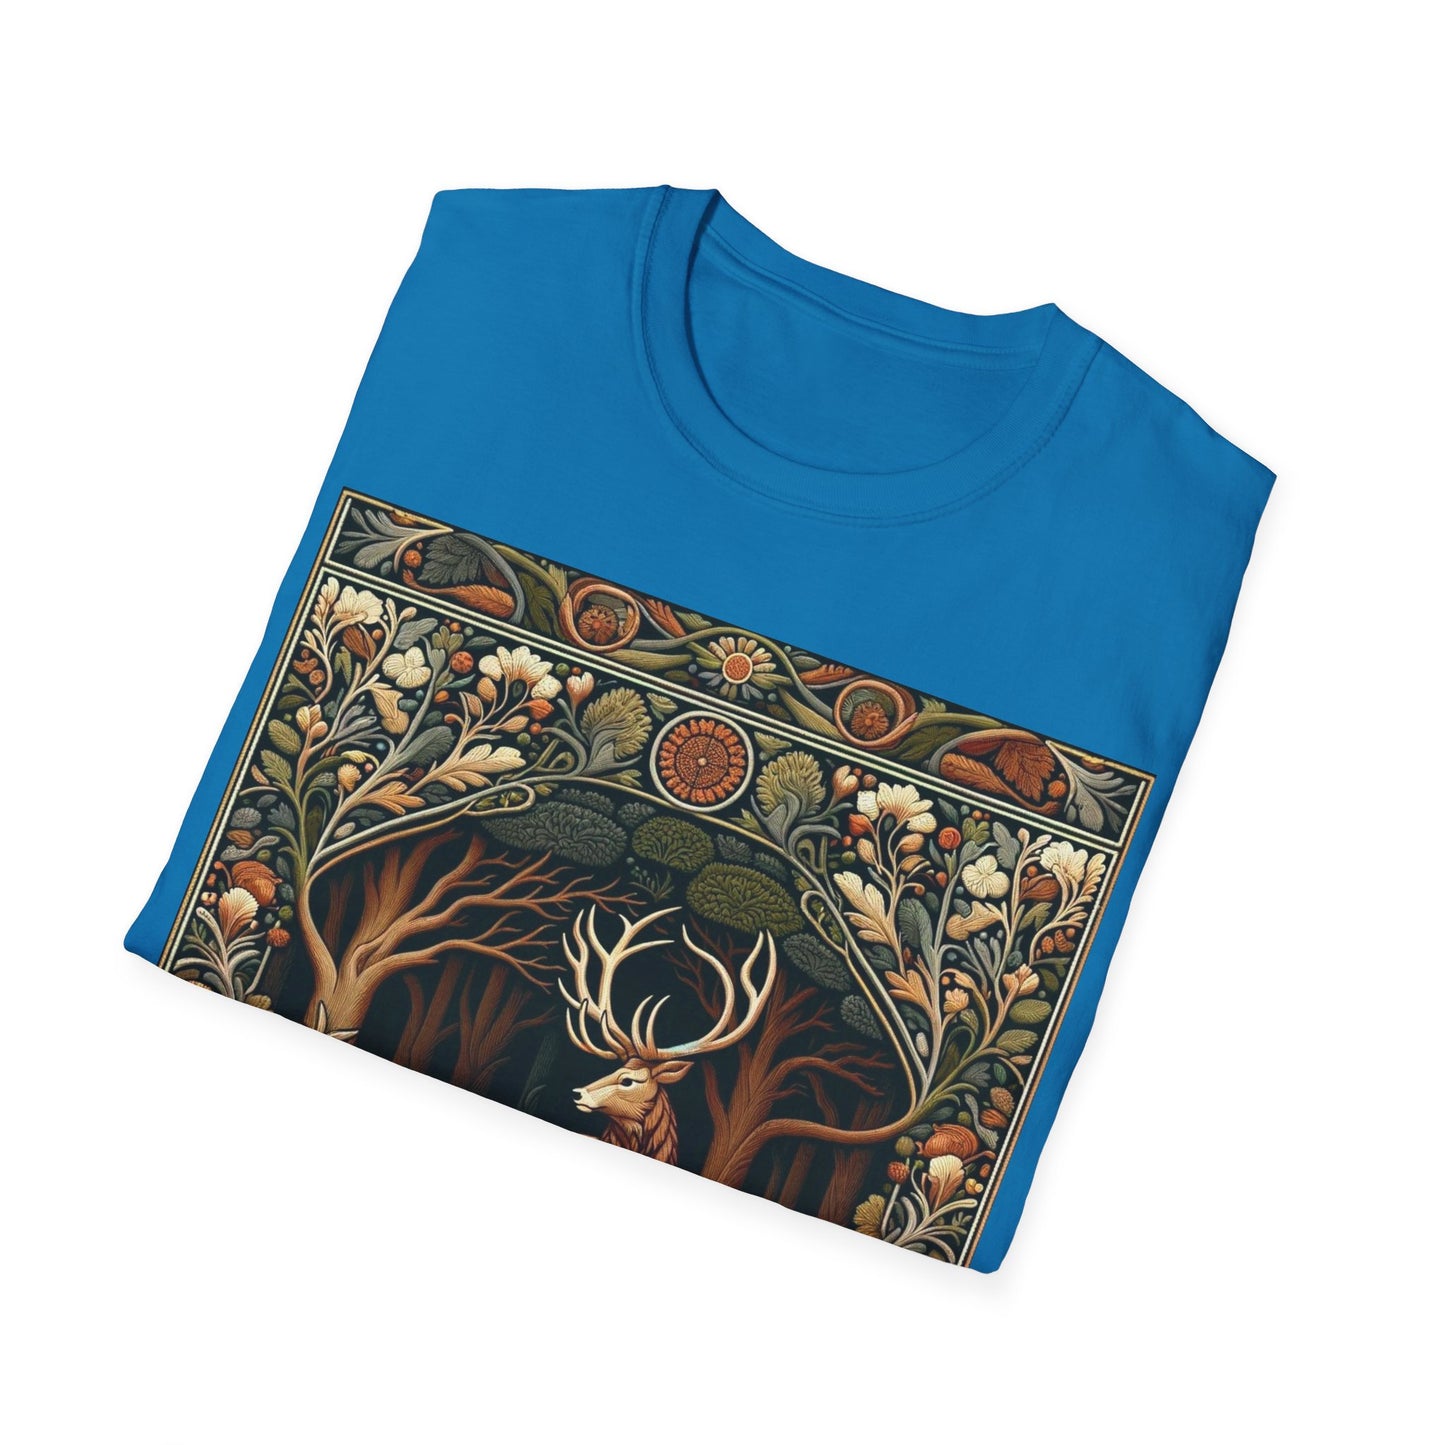 Inspirational Statment T-Shirt: Vote Nature! William Morris Inspired